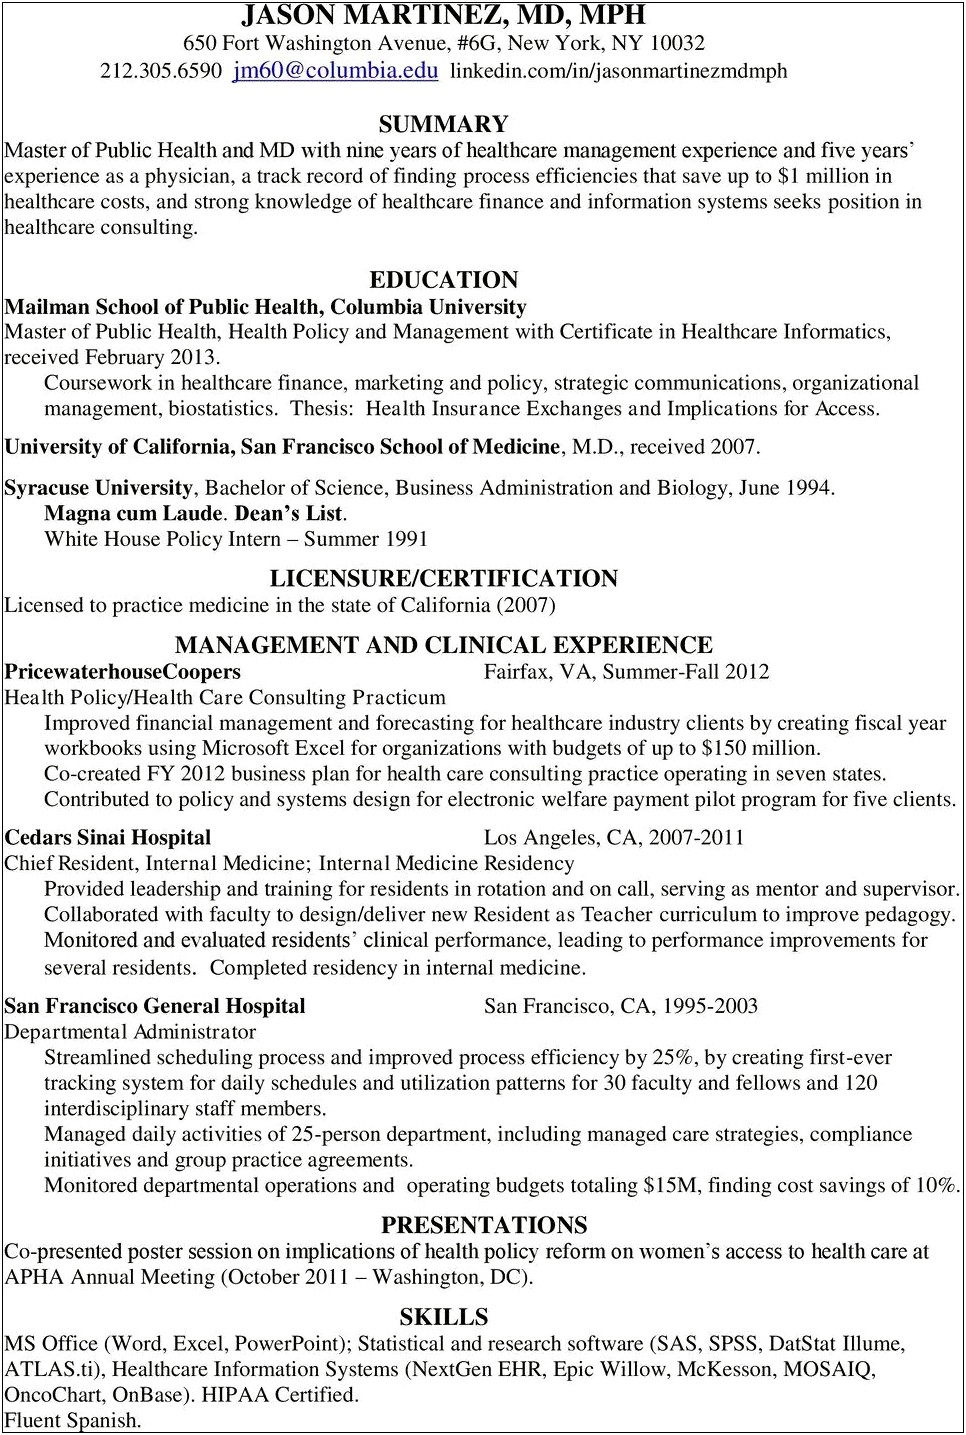 Mailman School Of Public Health Resume